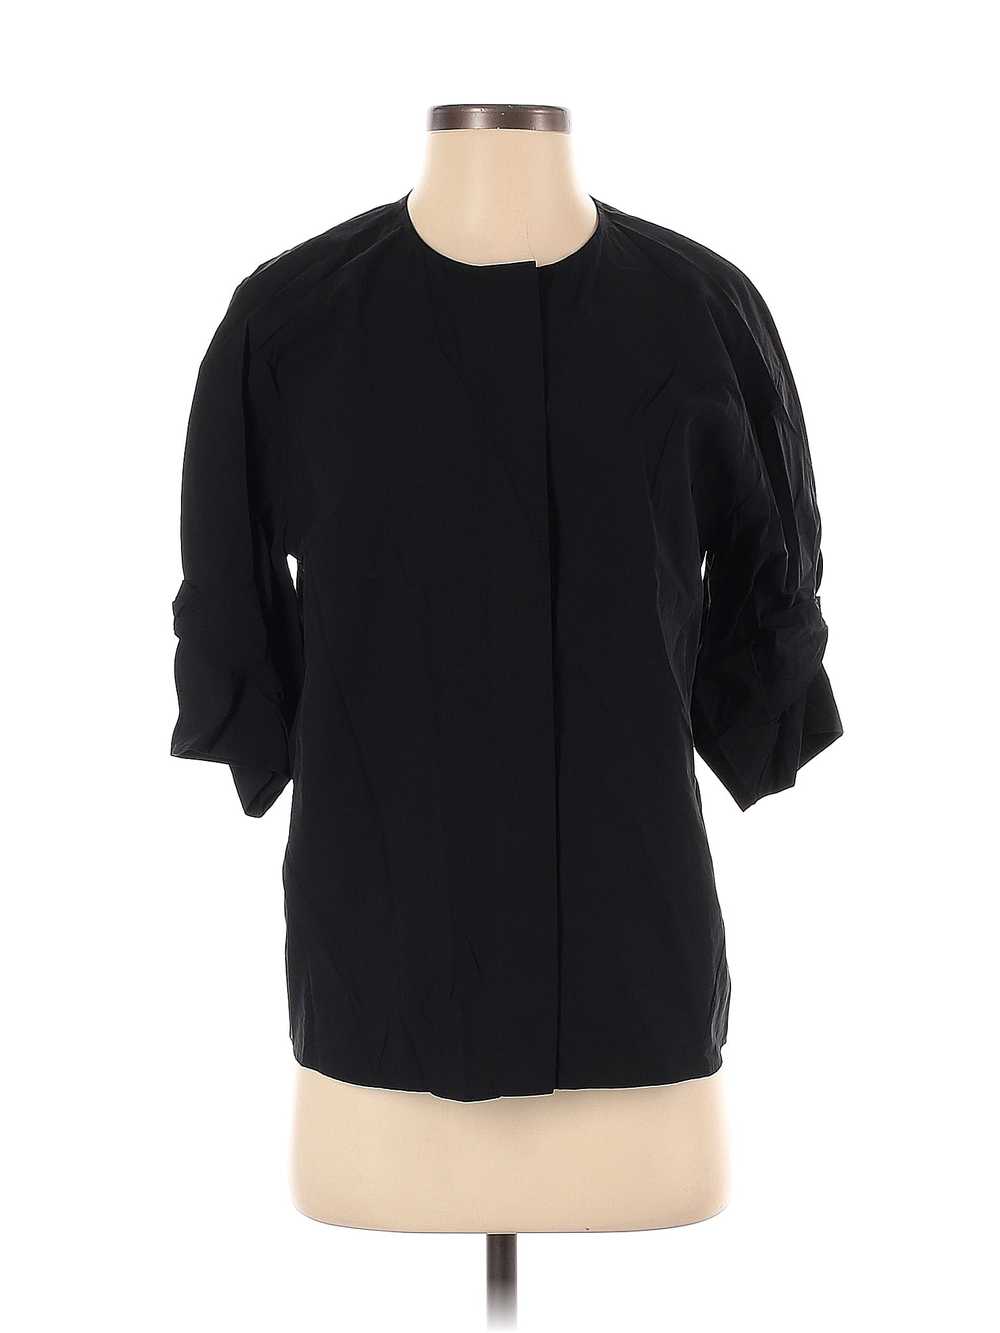 Cos Women Black 3/4 Sleeve Blouse 4 - image 1